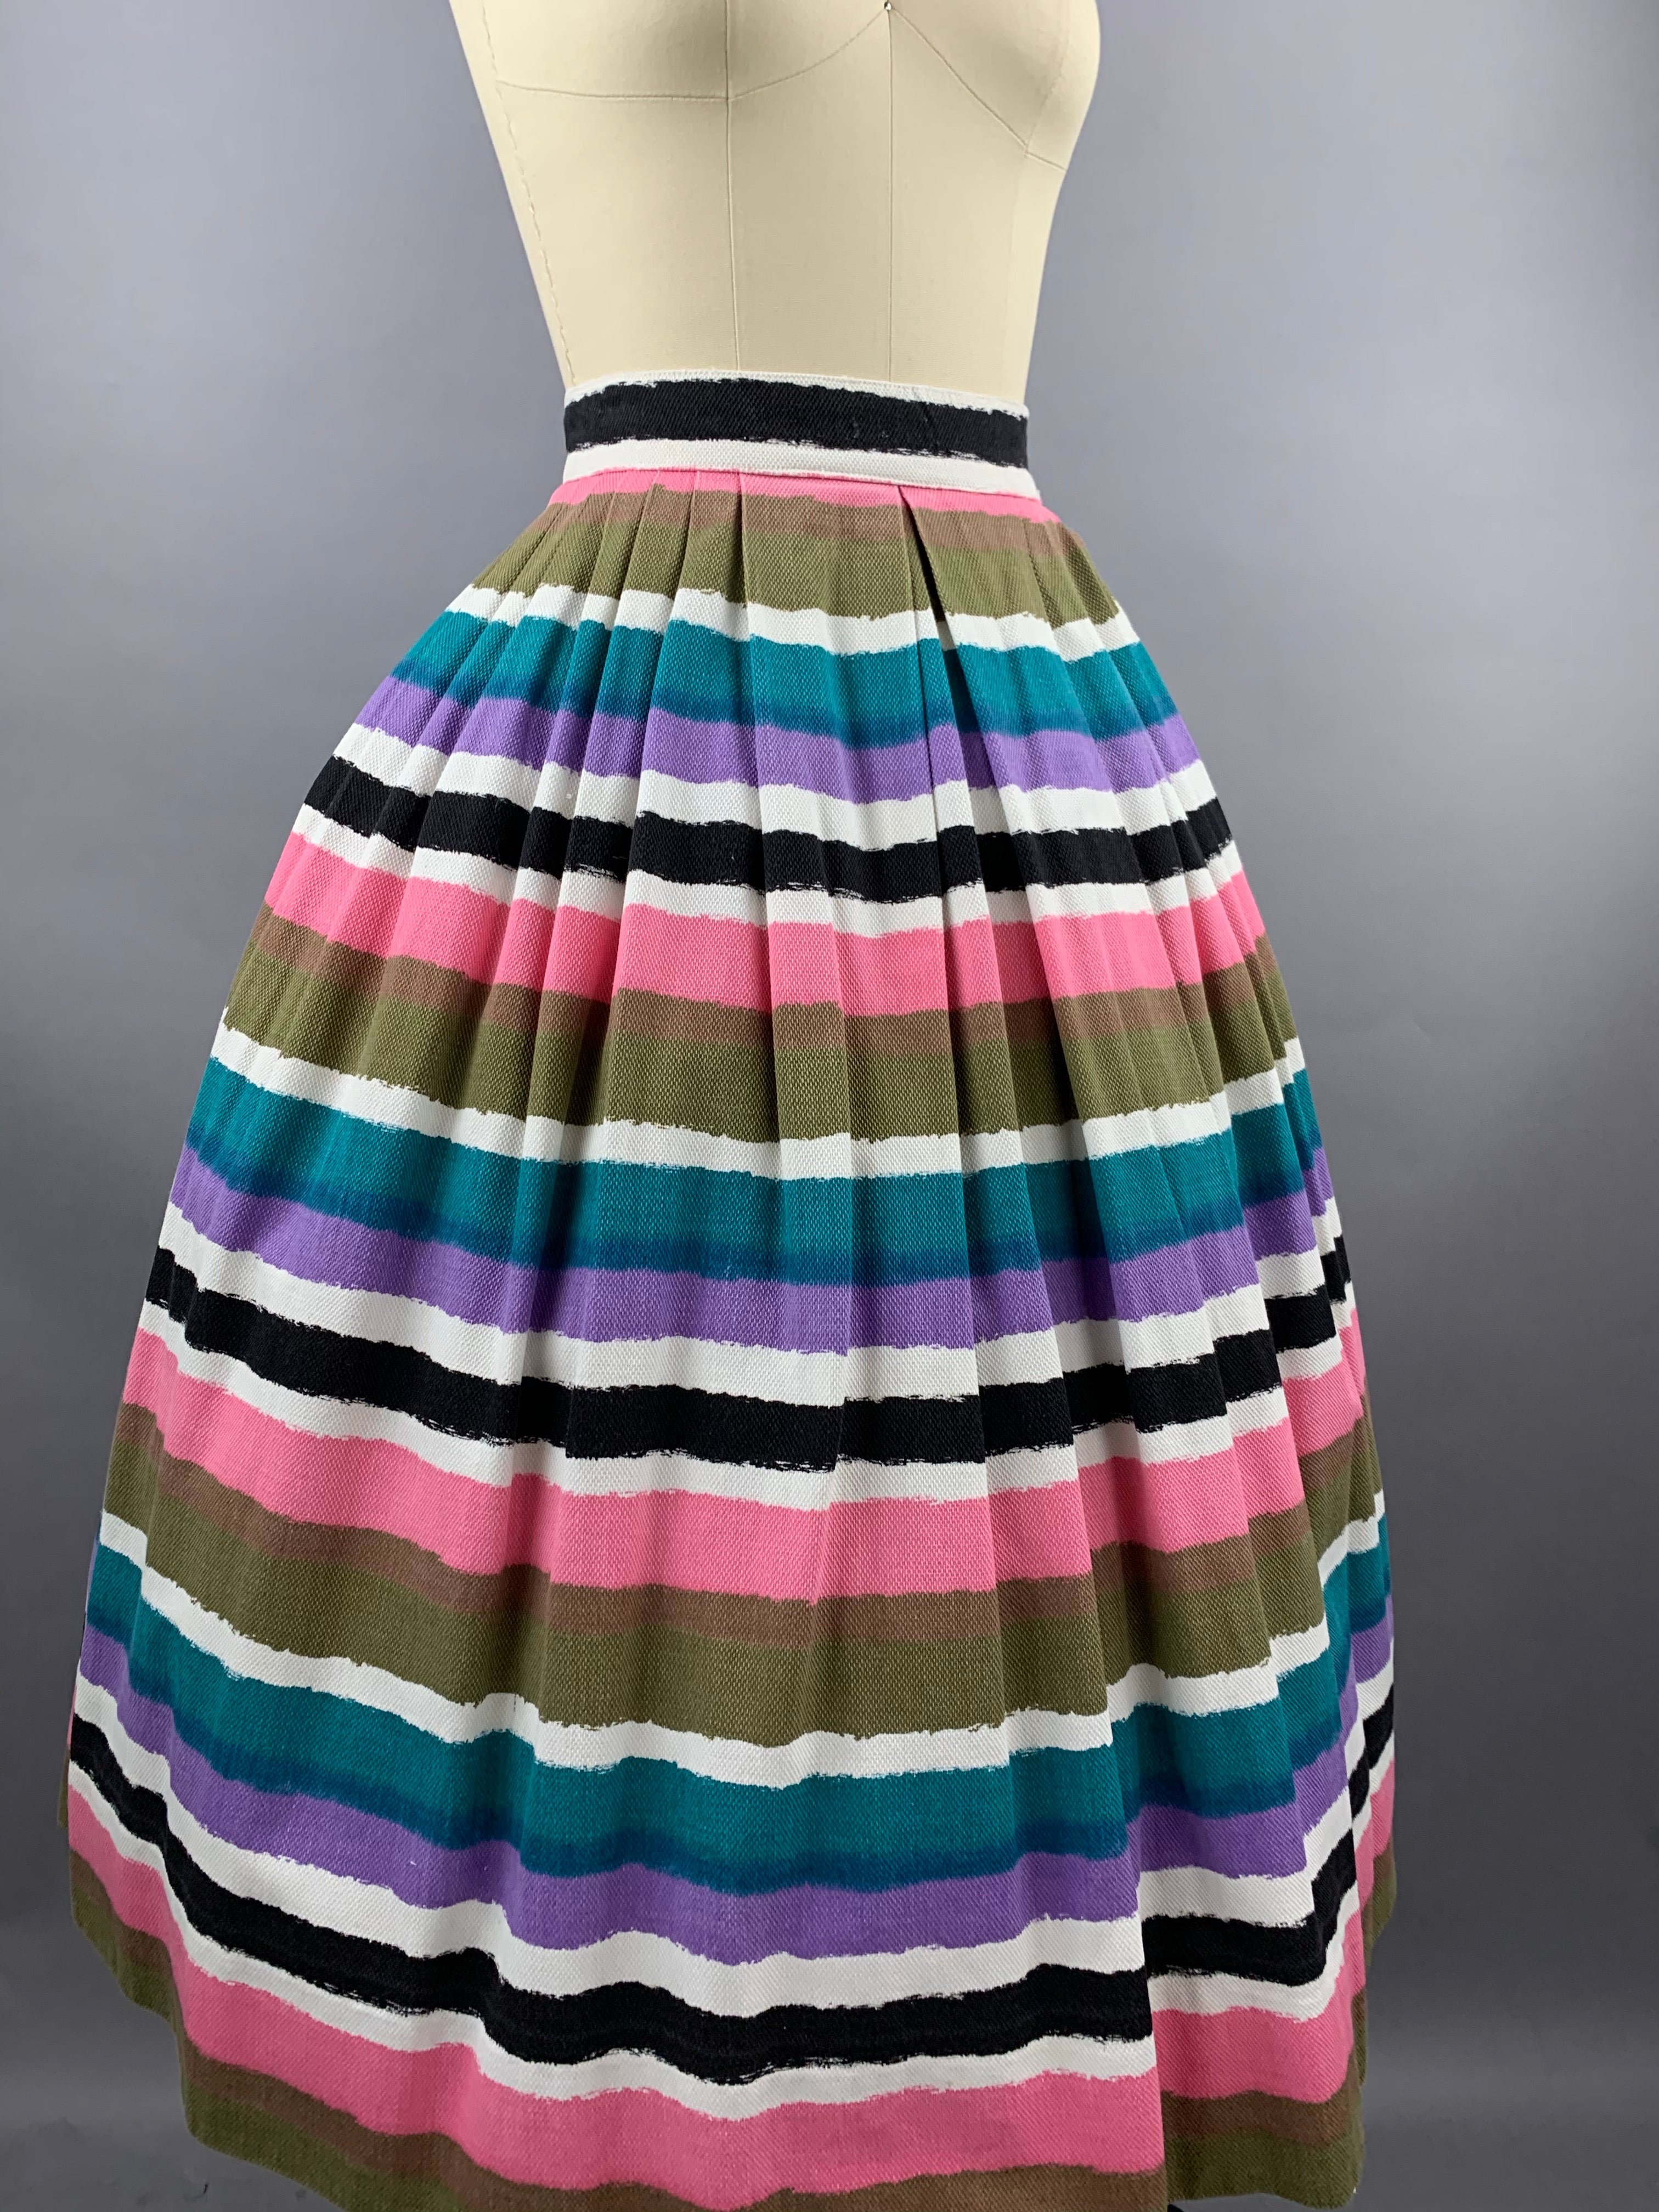 1960s Bobbie Brooks Rainbow Striped Cotton Pique Skirt Size M